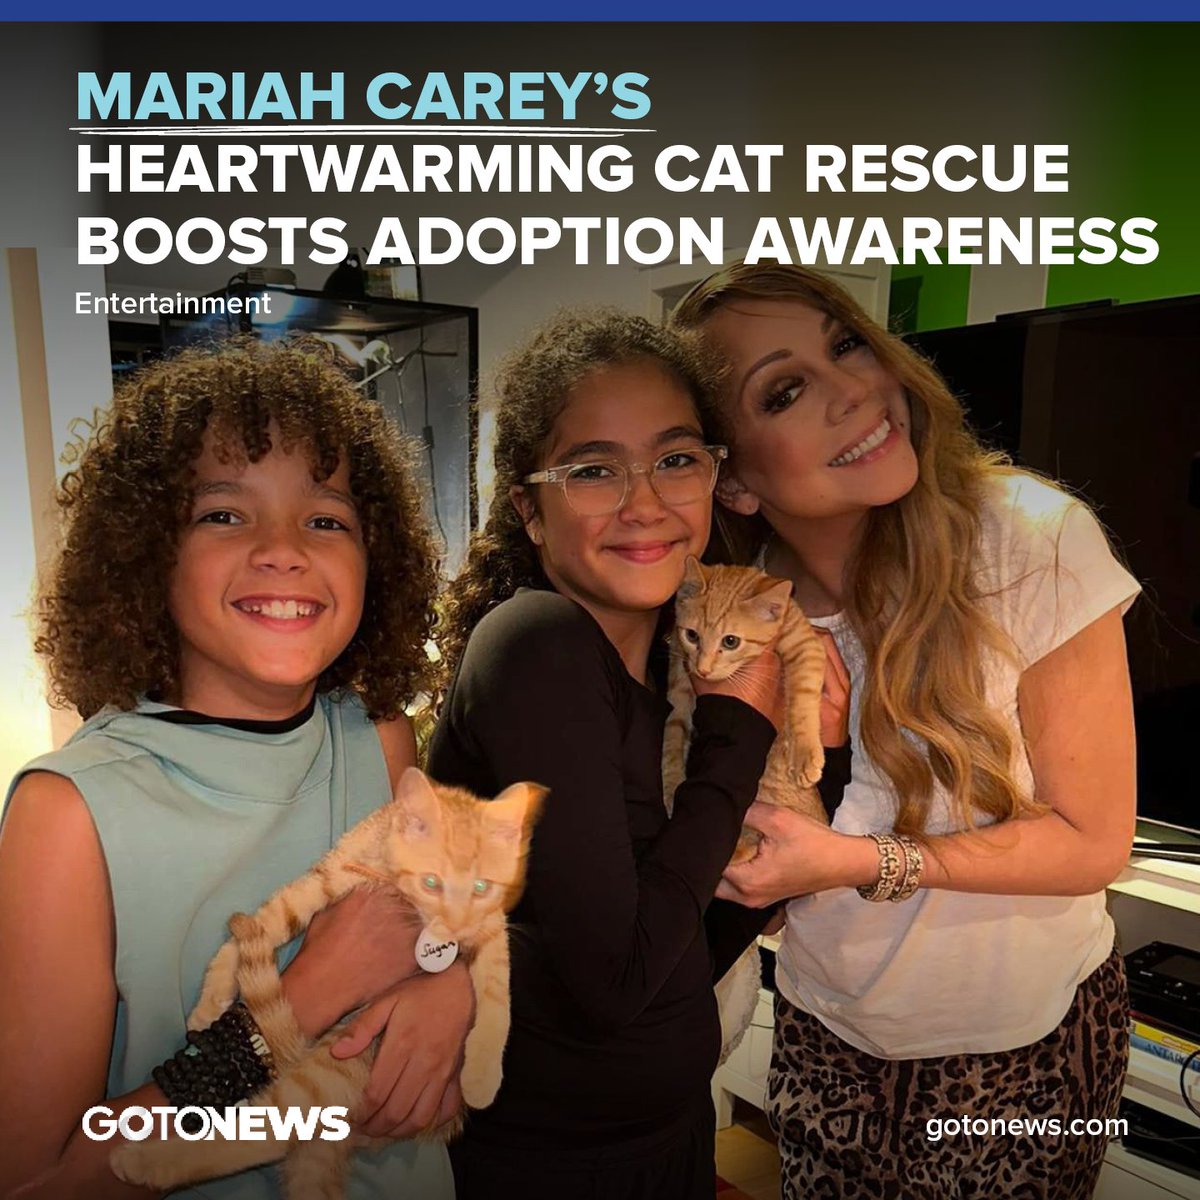 Mariah Carey's Heartwarming Cat Rescue Boosts Adoption Awareness!. By choosing adoption, Mariah shone a spotlight on the importance of giving shelter animals a home.
gotonews.com
#mariahcarey #hollywood #hollywoodnews #hollywoodsinger #adoptionawareness #gotonews